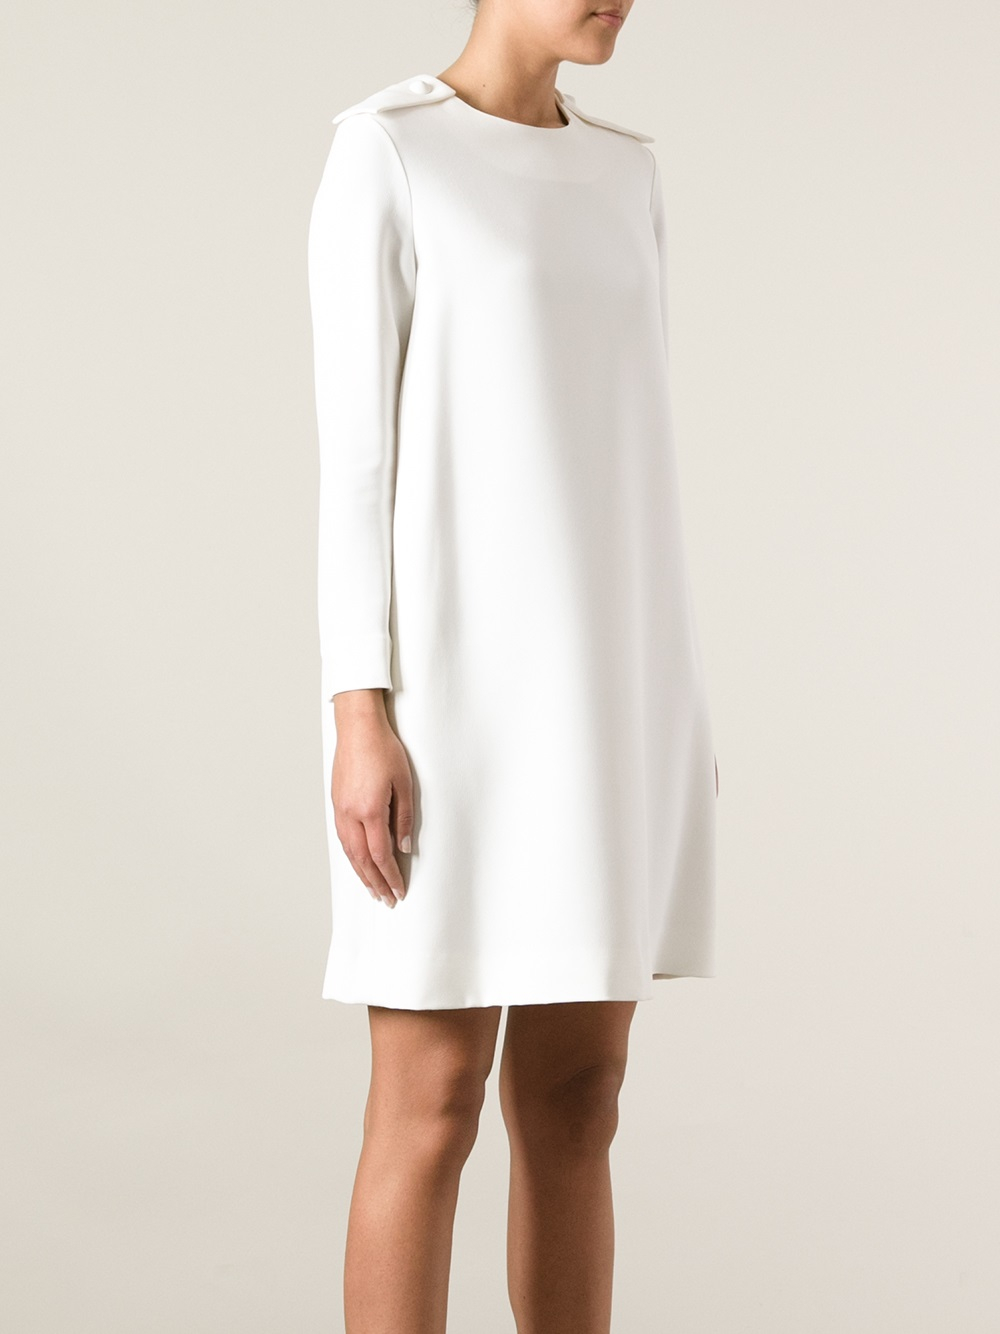 Lyst - Chloé Long Sleeve Dress in White